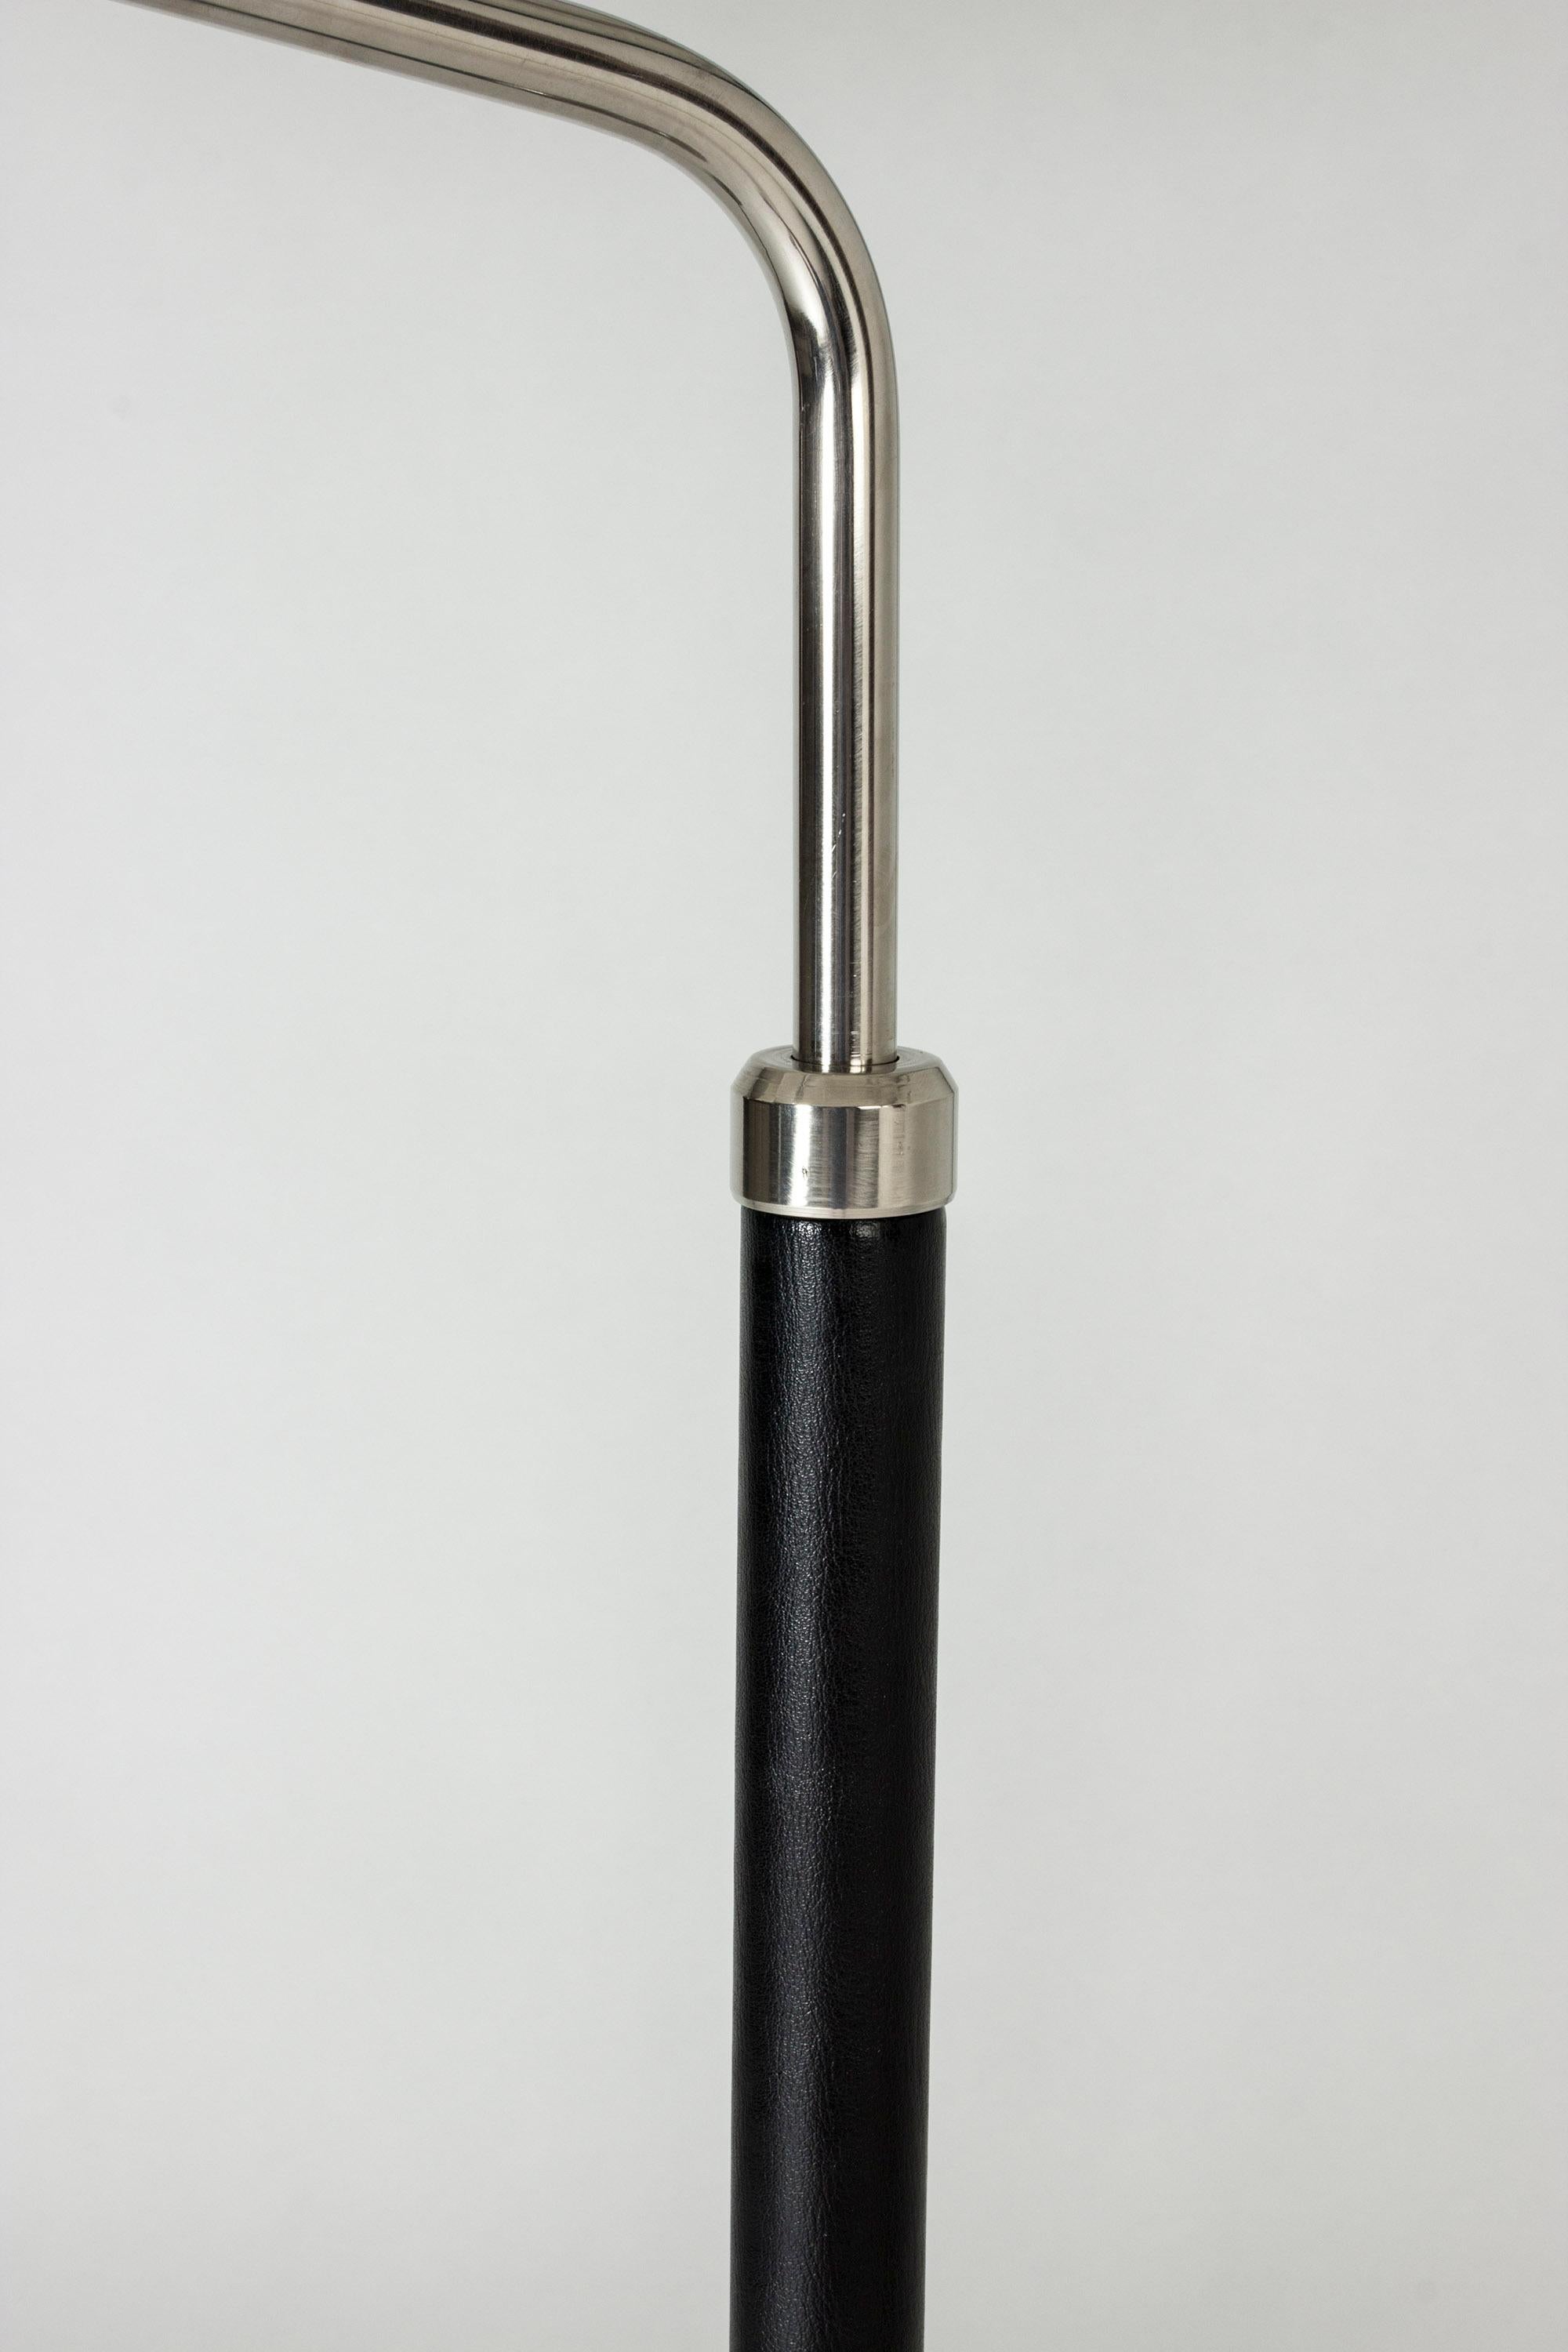 Mid-20th Century Pair of Functionalist Floor Lamps by Bertil Brisborg For Sale